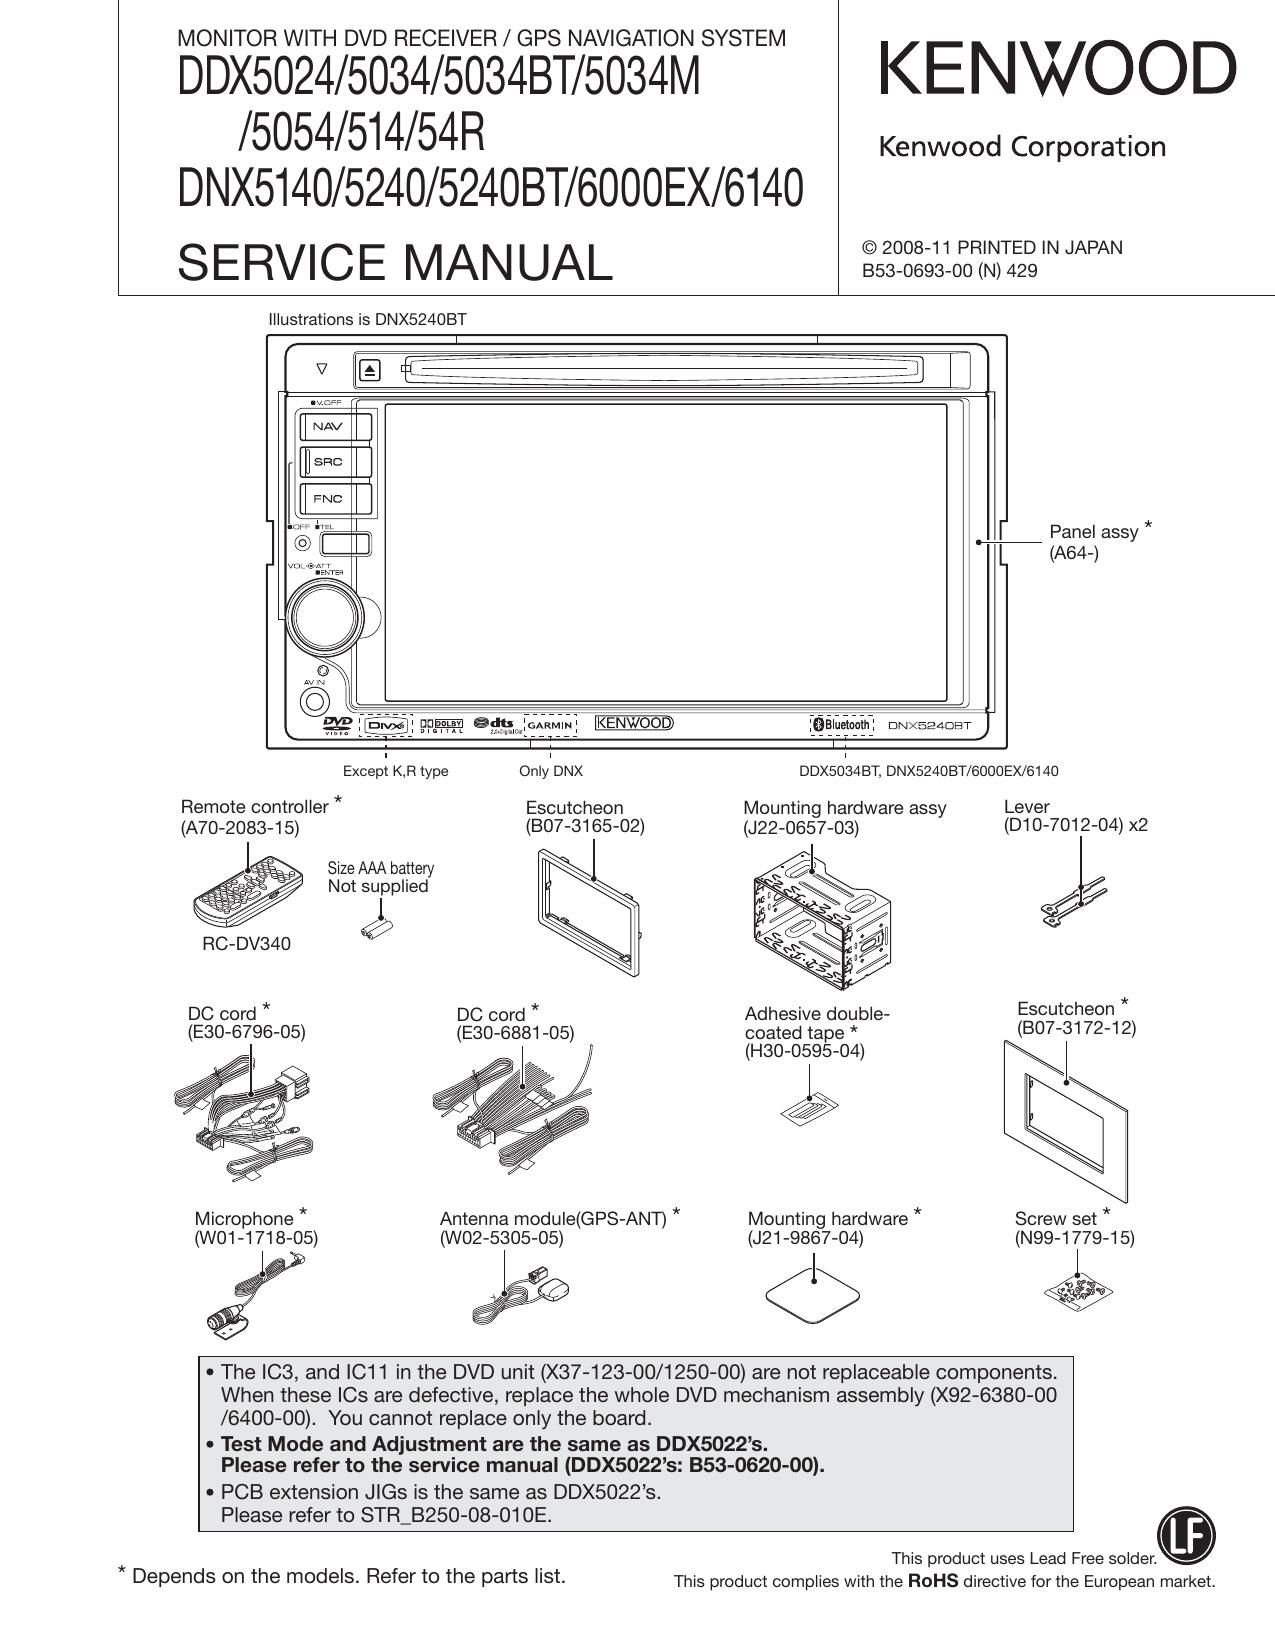 Kenwood DNX 5240 BT Service Manual